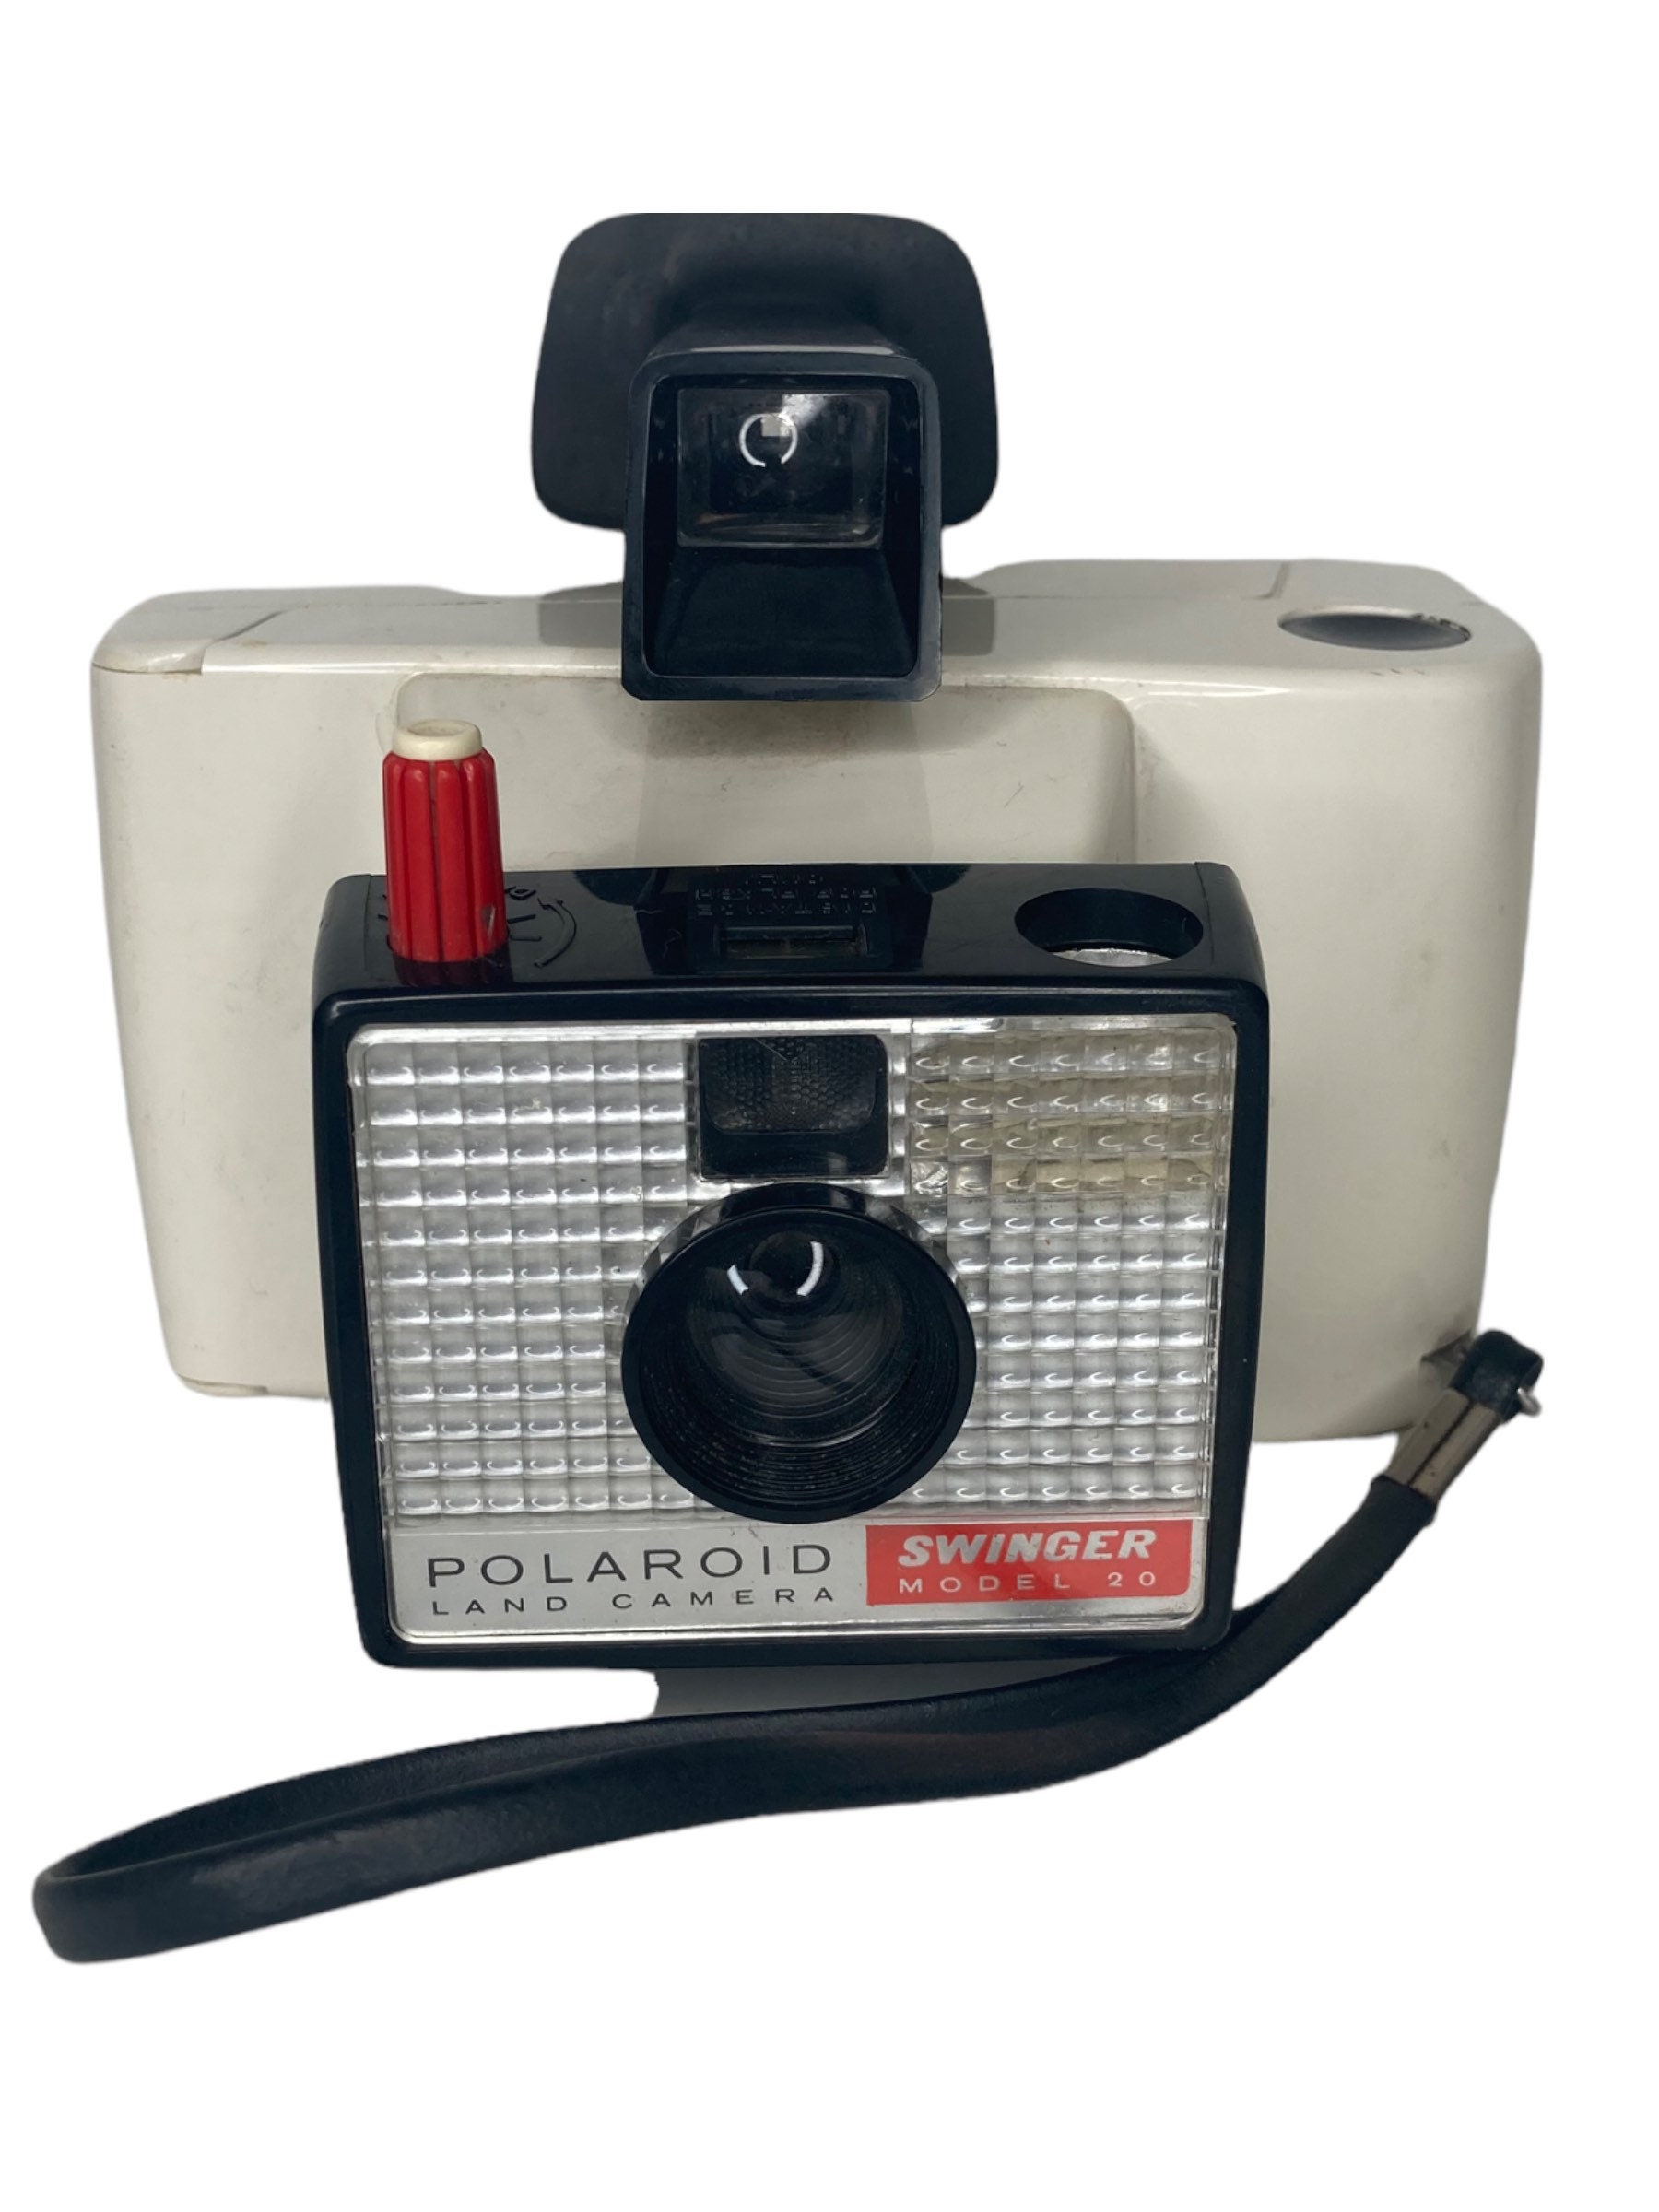 Vintage Polaroid Camera Rare Vintage Polaroid Swinger Camera image photo